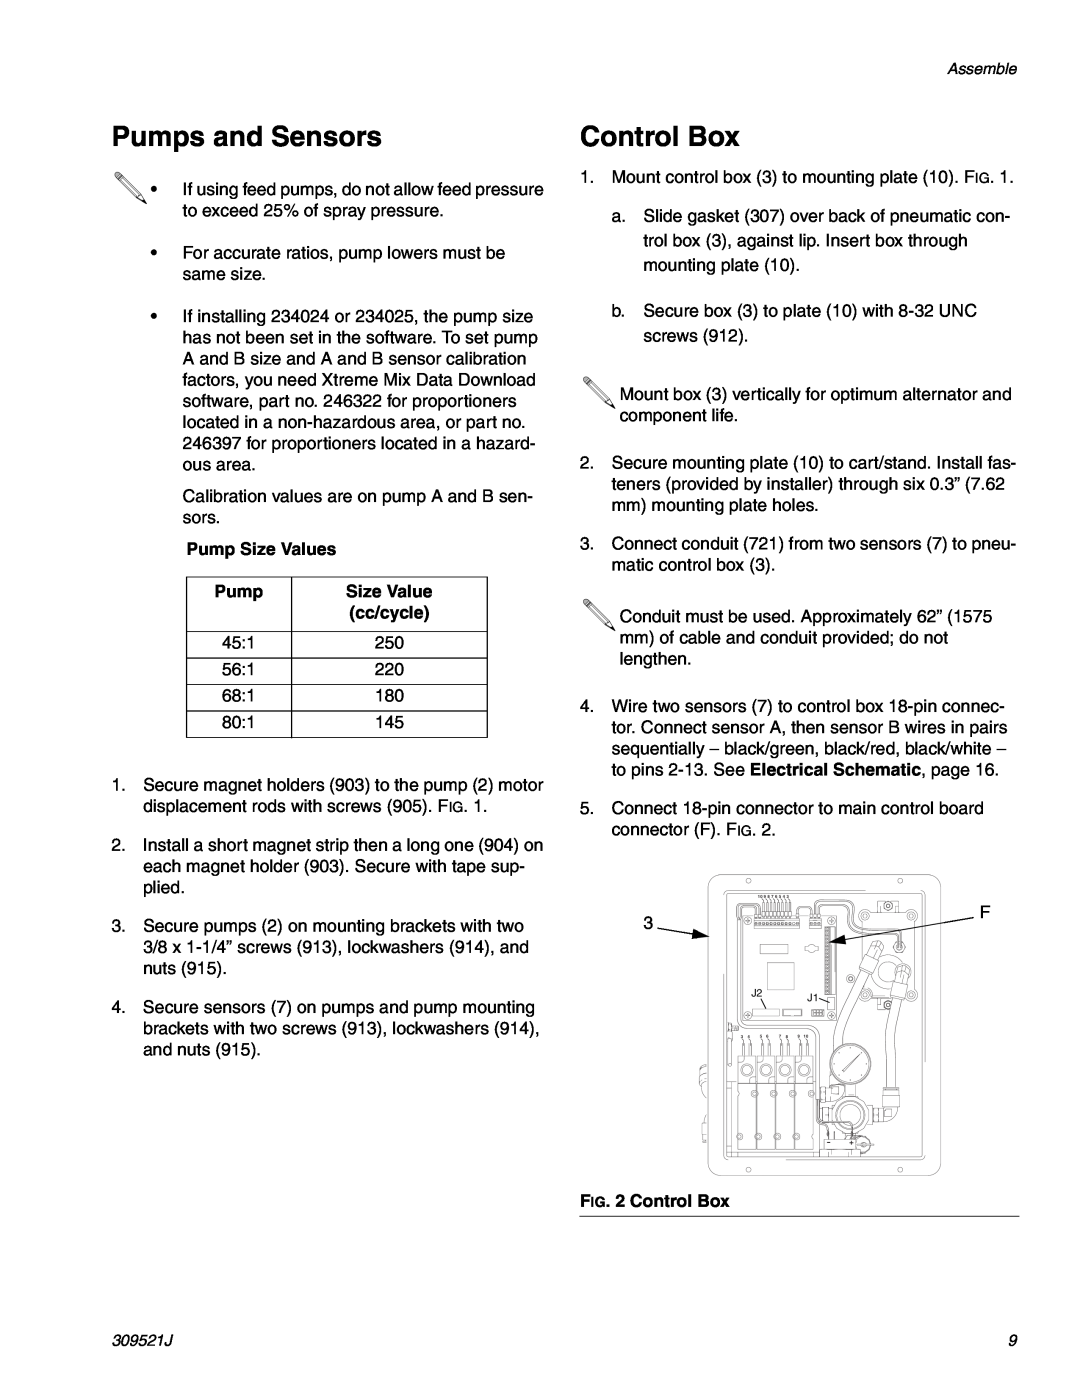 Hitachi 309521J important safety instructions Pumps and Sensors, Control Box, Pump Size Values, cc/cycle 